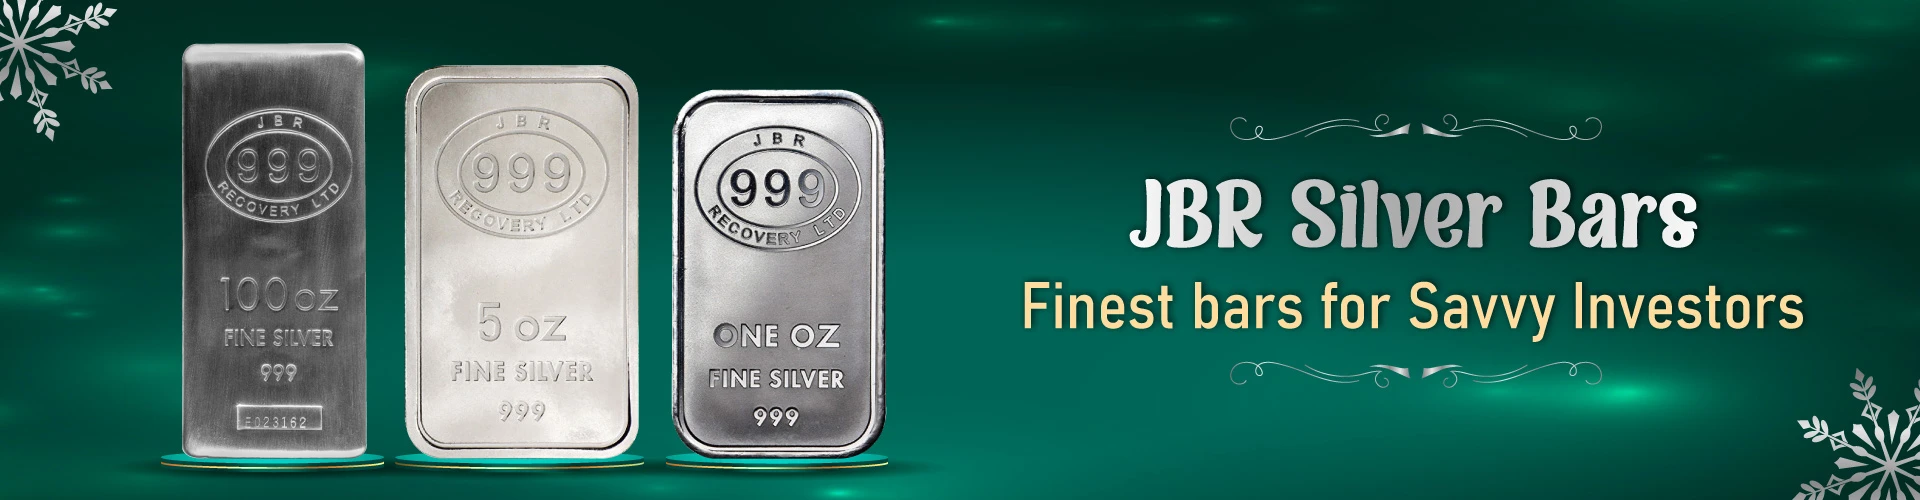 JBR's Finest Silver Bars Await You